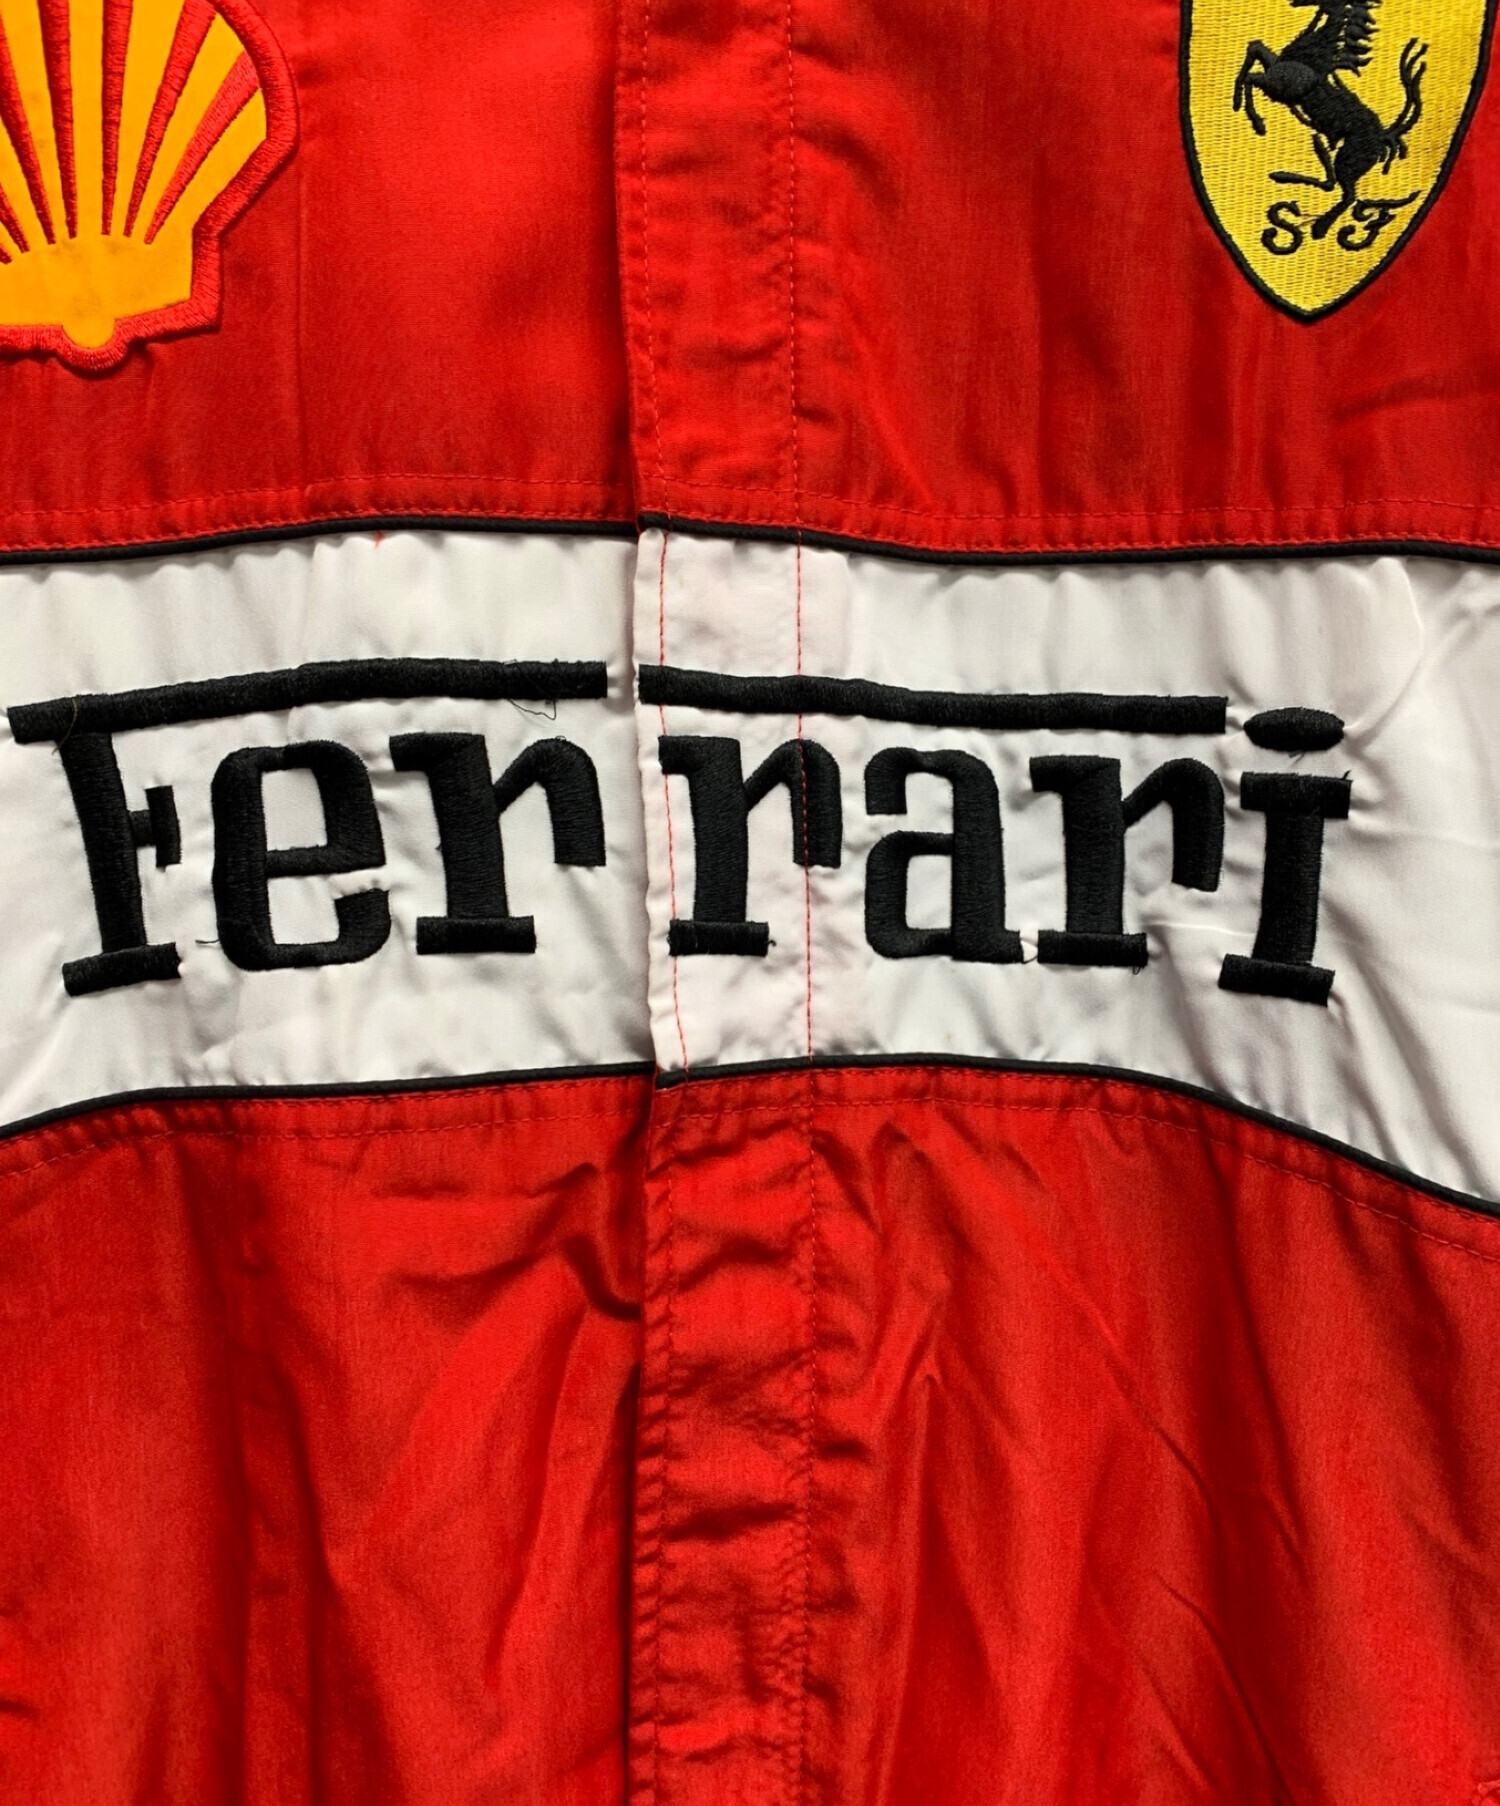 Ferrari (フェラーリ) レーシングジャケット レッド サイズ:XXL